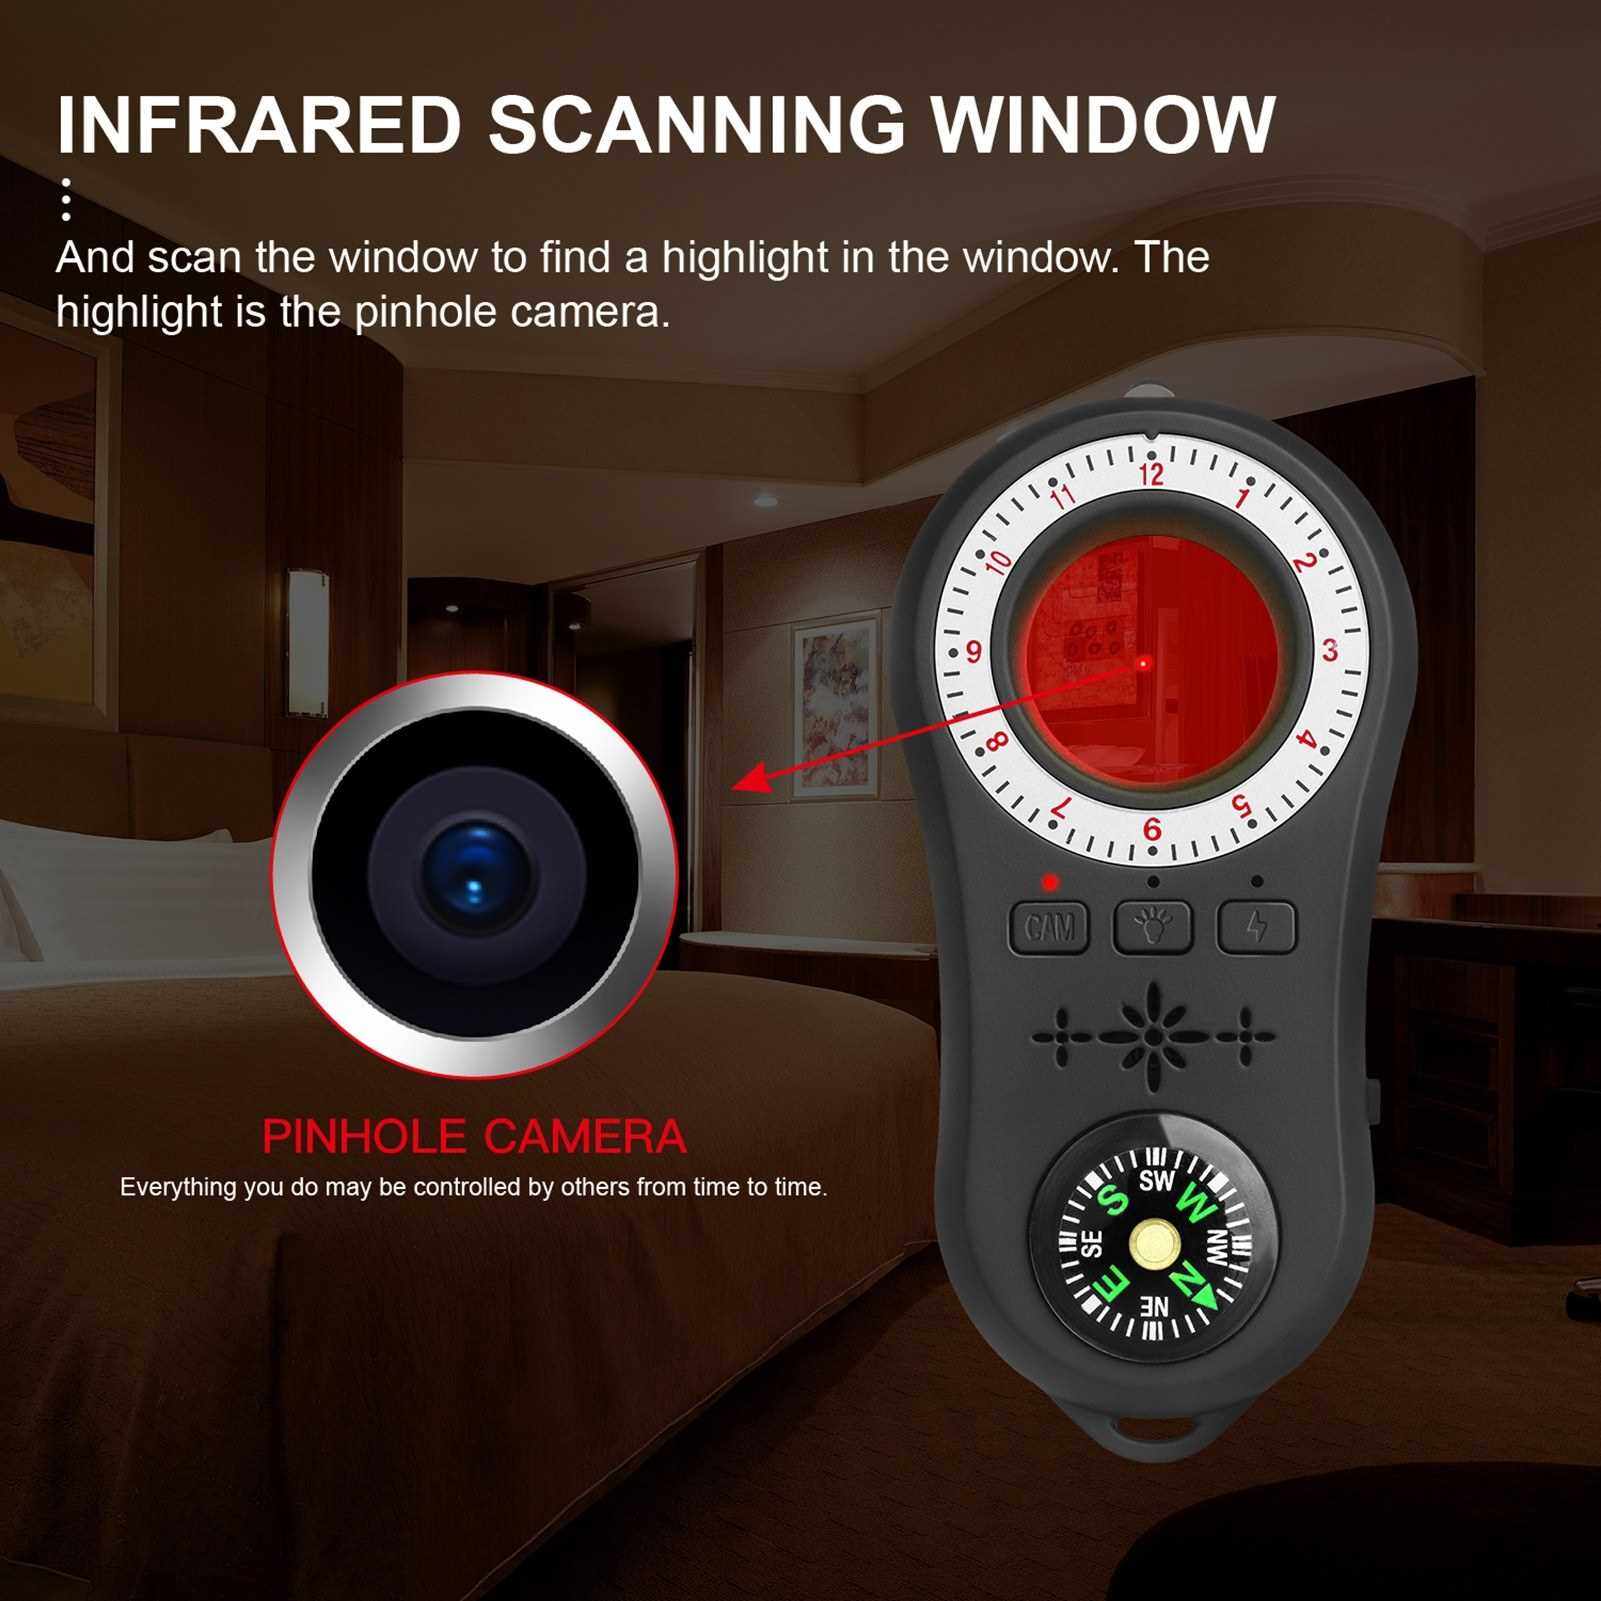 Personal Security Alarm Candid Camera Detector Cameras Infrared Scanner Burglar Alarm Wireless Signal Scanner, Security Motion Vibration Sensor for Travel, Home, Hotels (Blue)